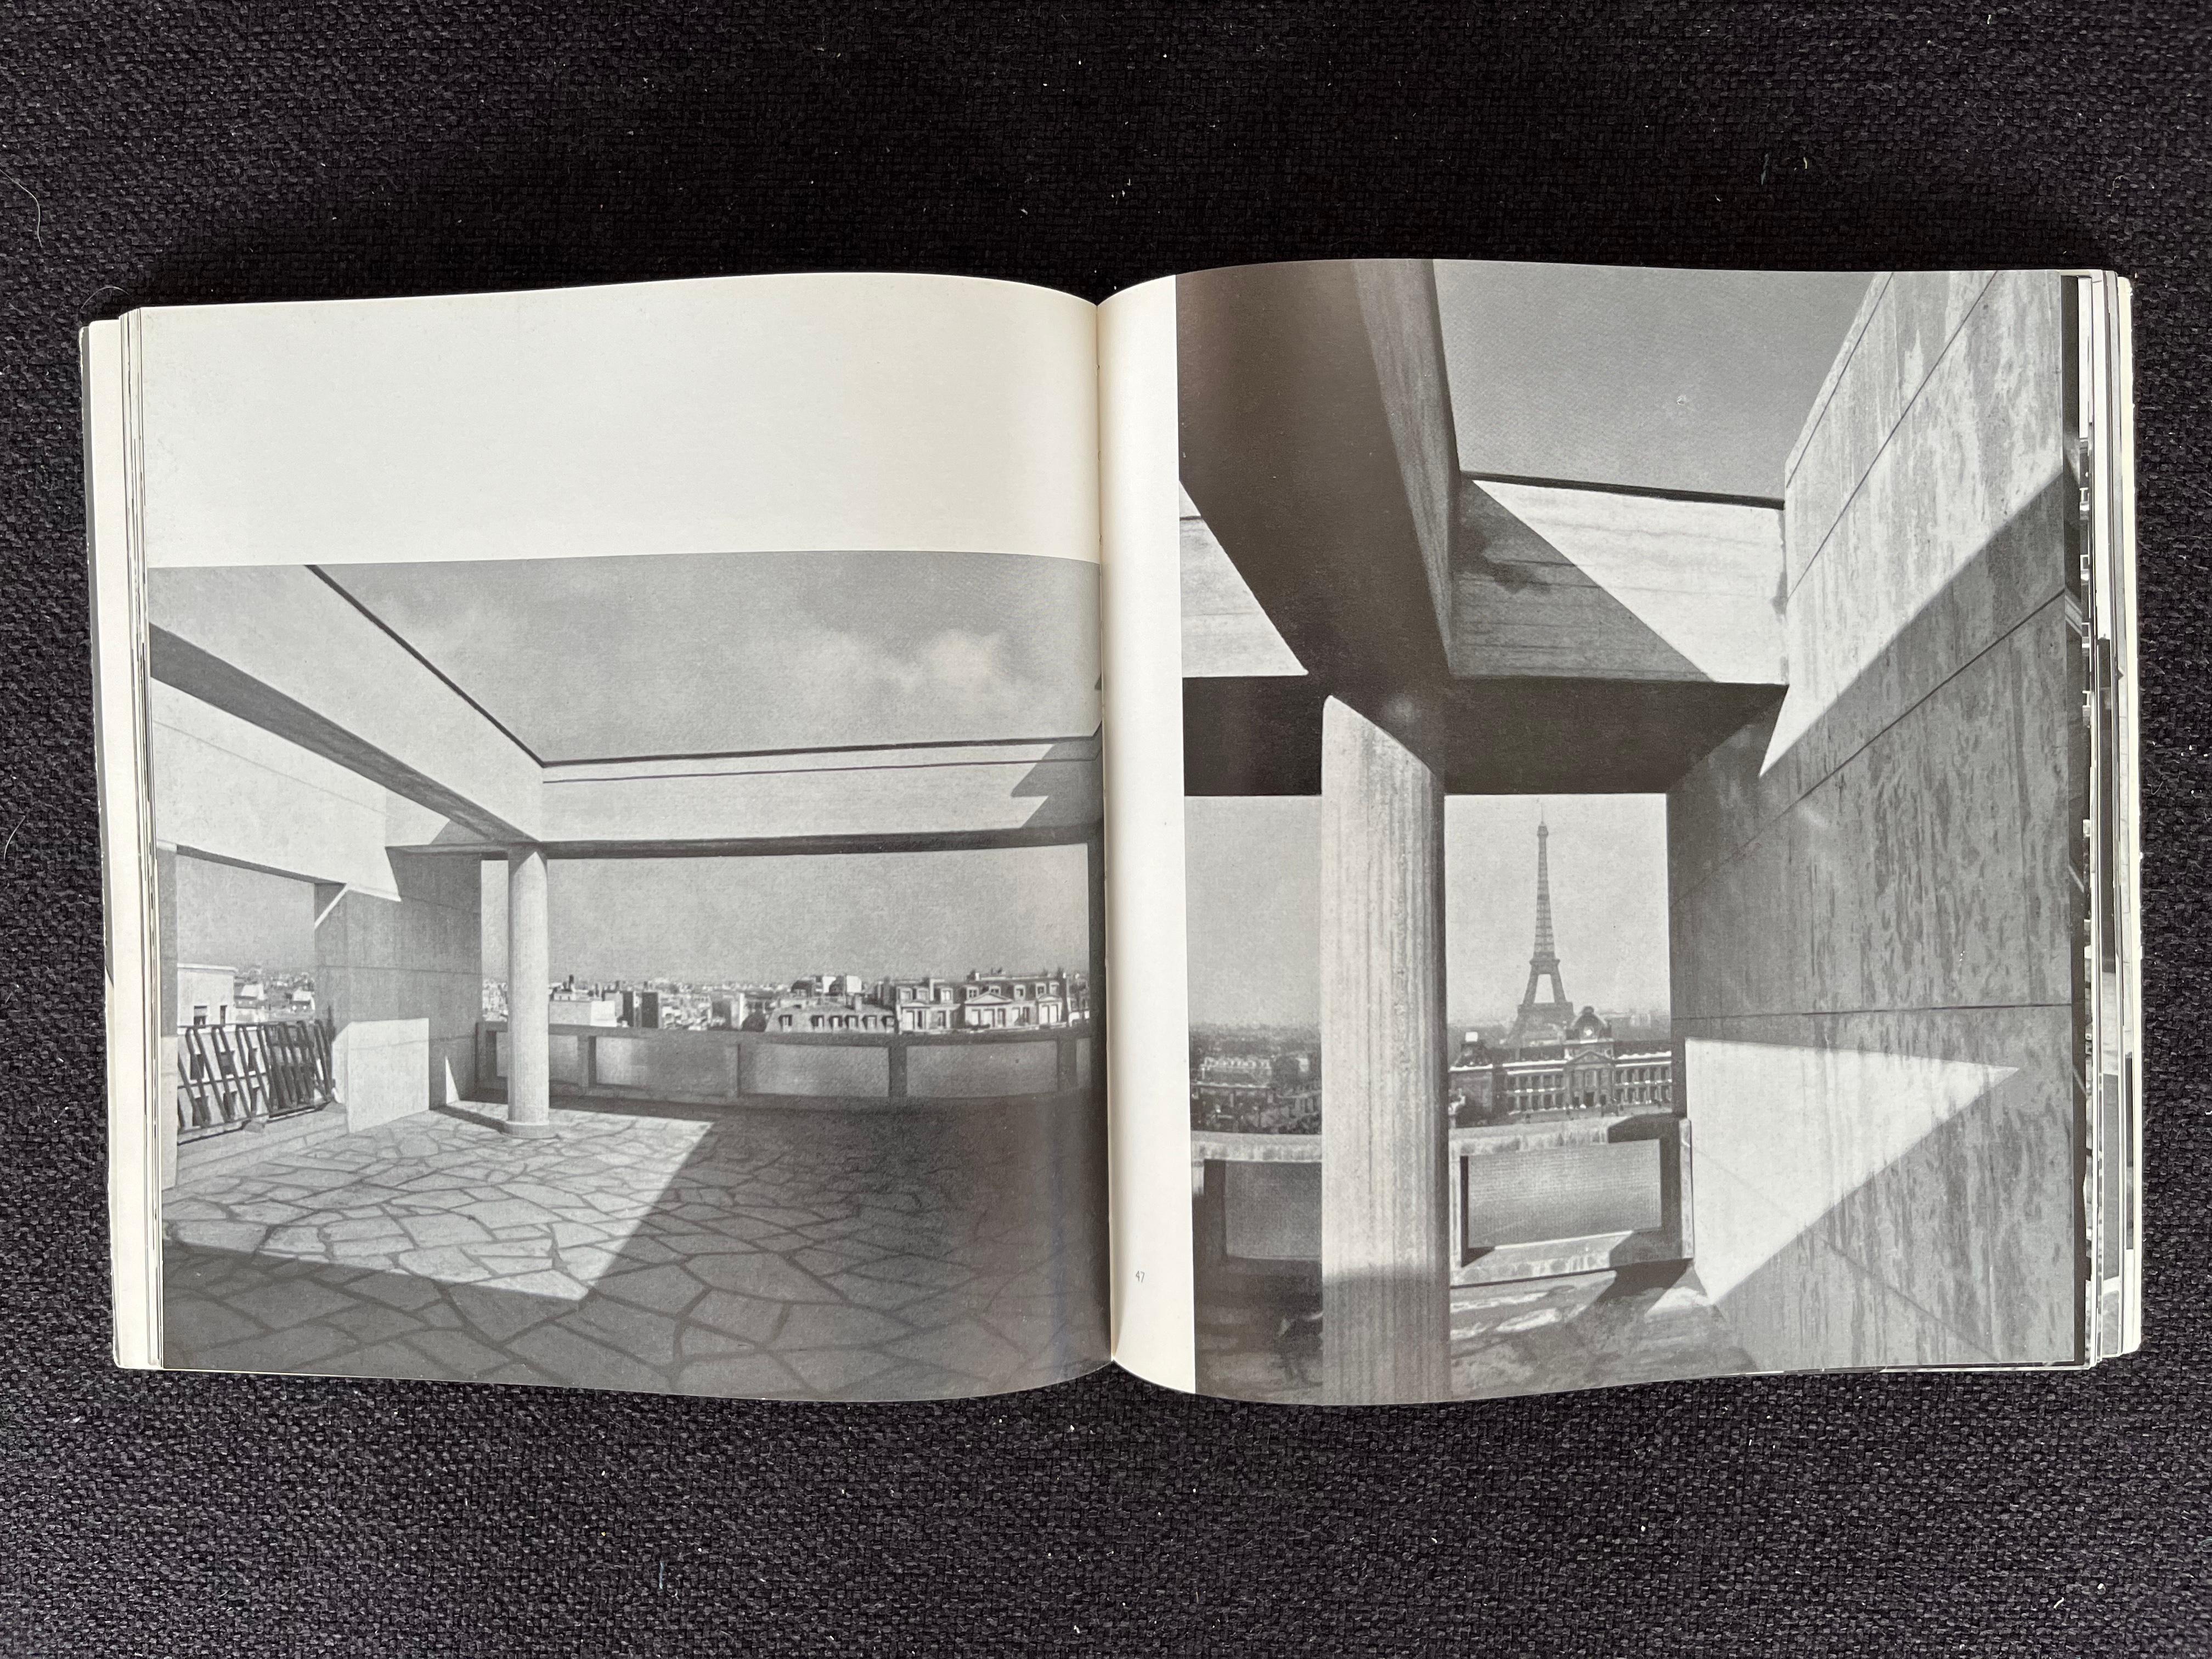 - 1958
- Photos: Lucie Hervé
- publisher: Gerd Hatje 
- many photos
- good original condition
- 93 pages
- jr.